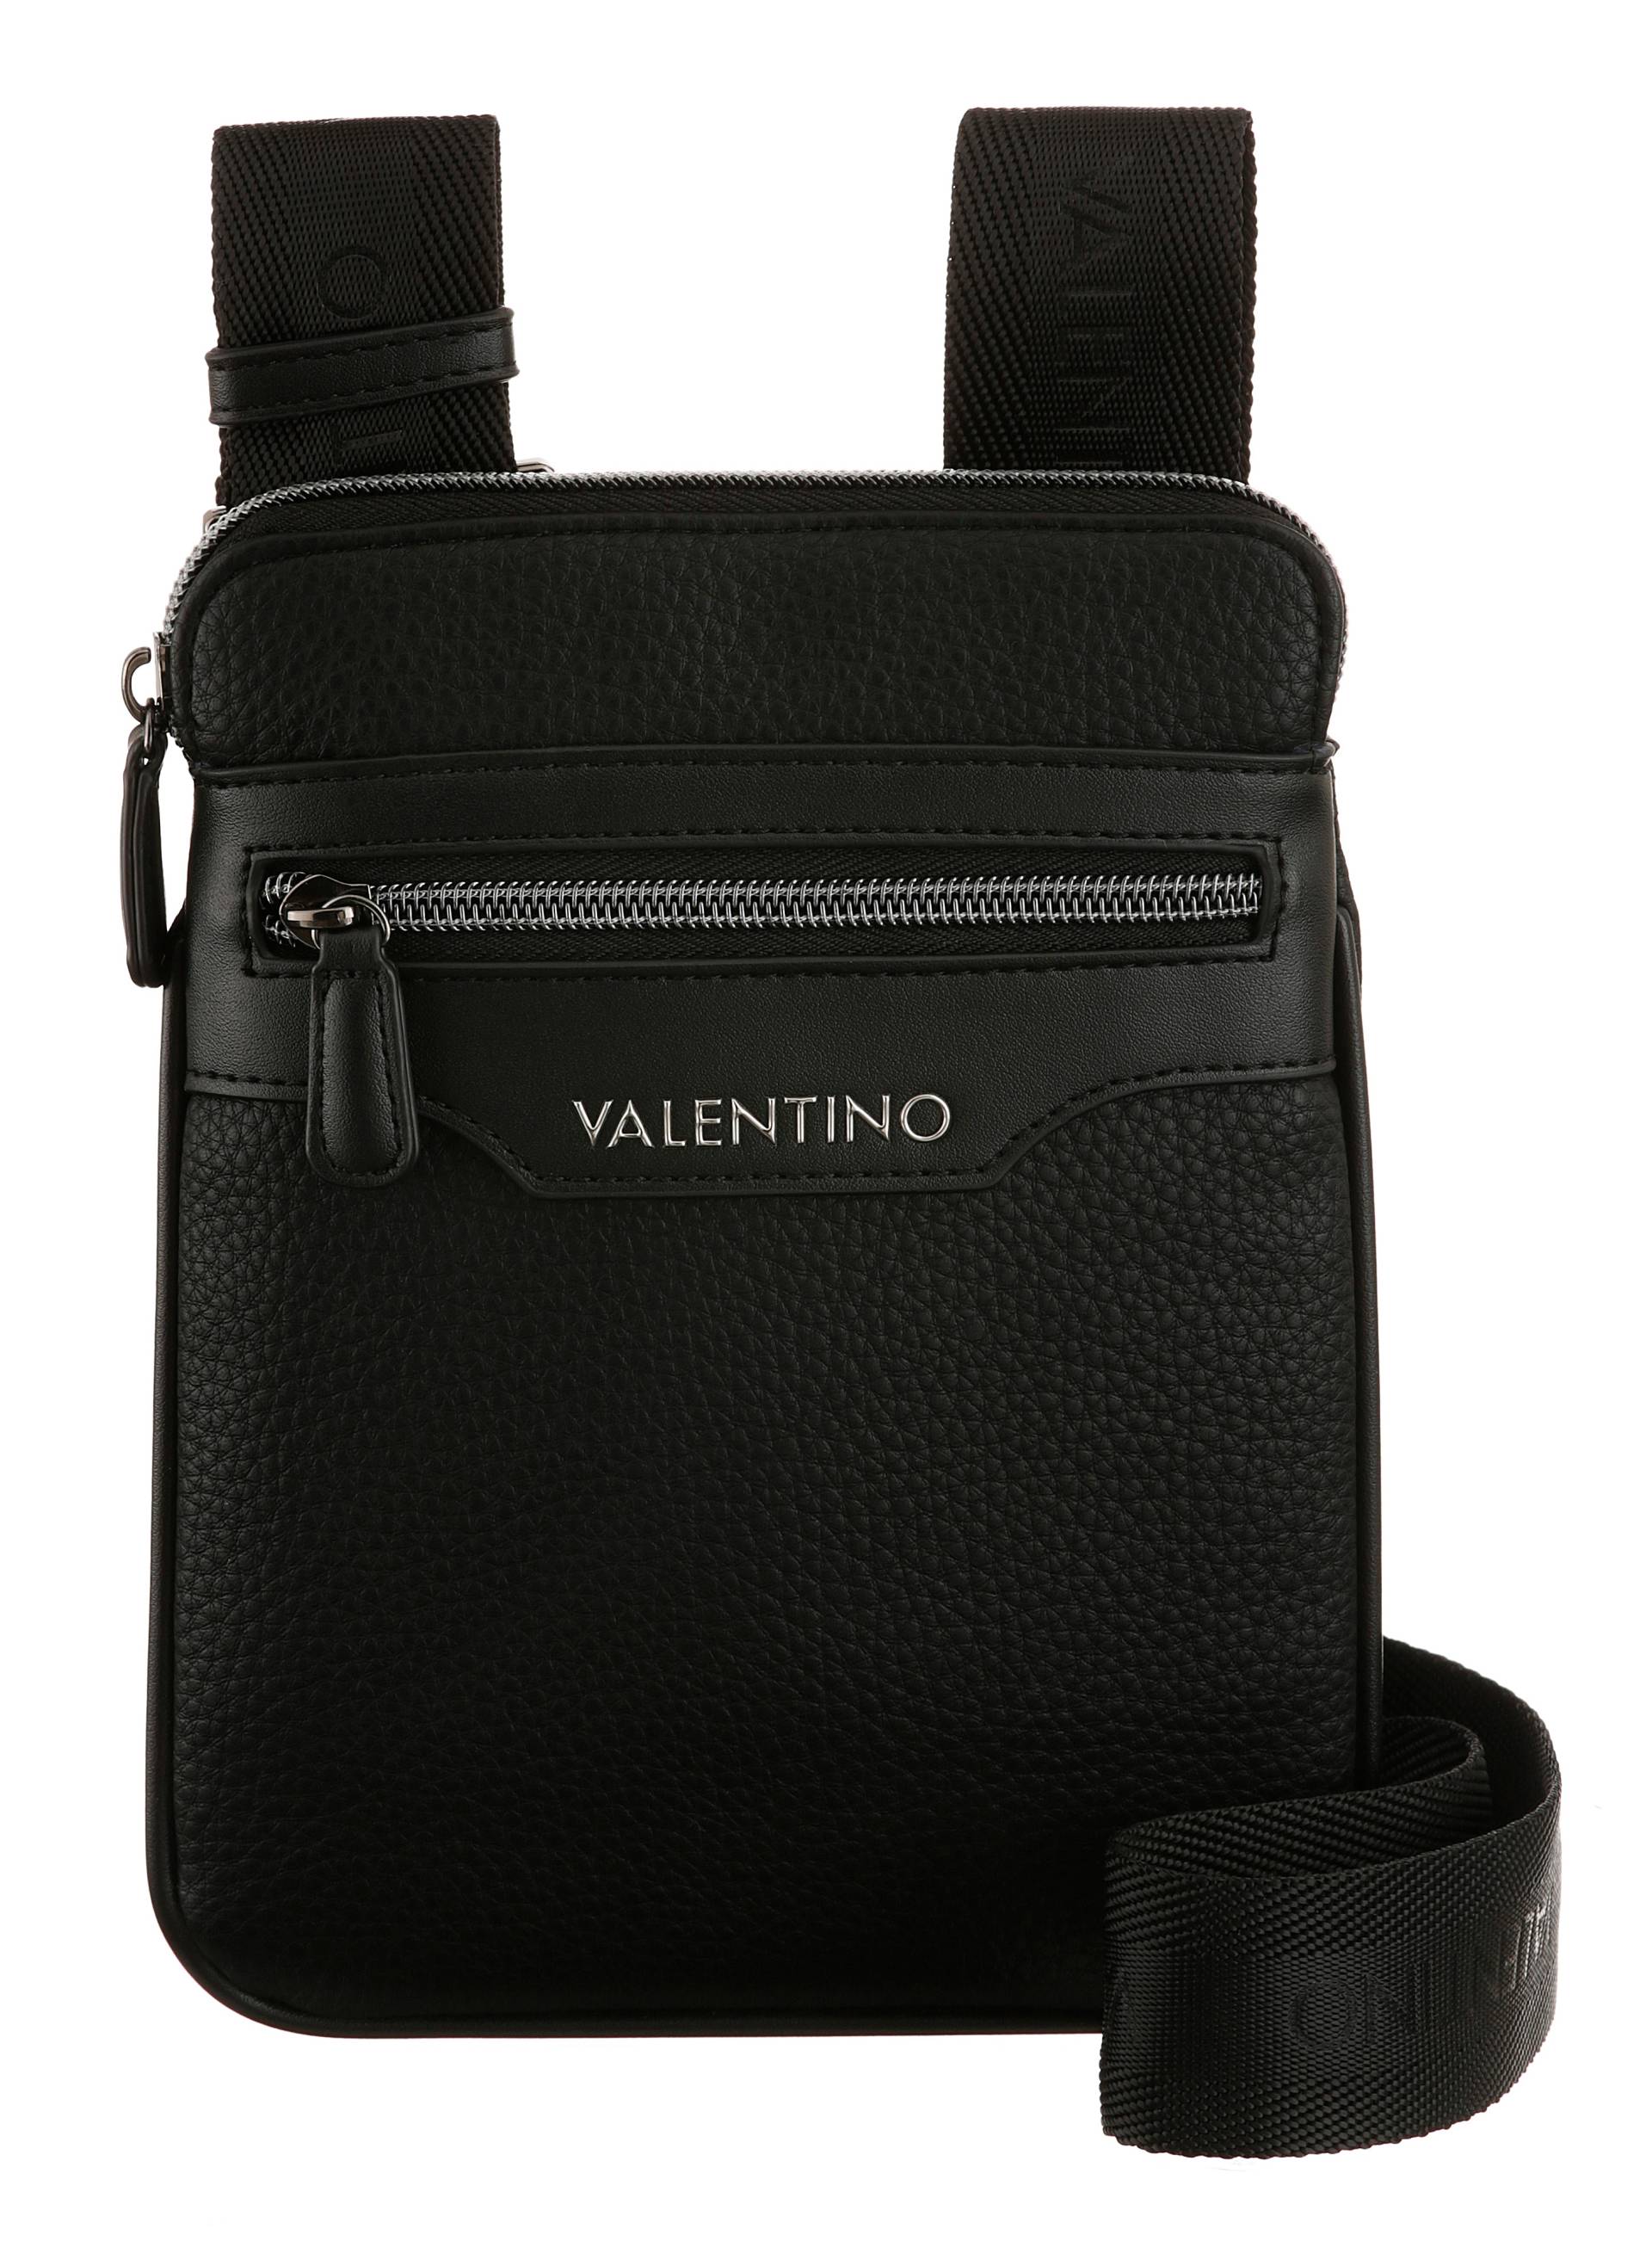 VALENTINO BAGS Umhängetasche "EFEO", Handtasche Damen Tasche Damen Schultertasche von Valentino Bags